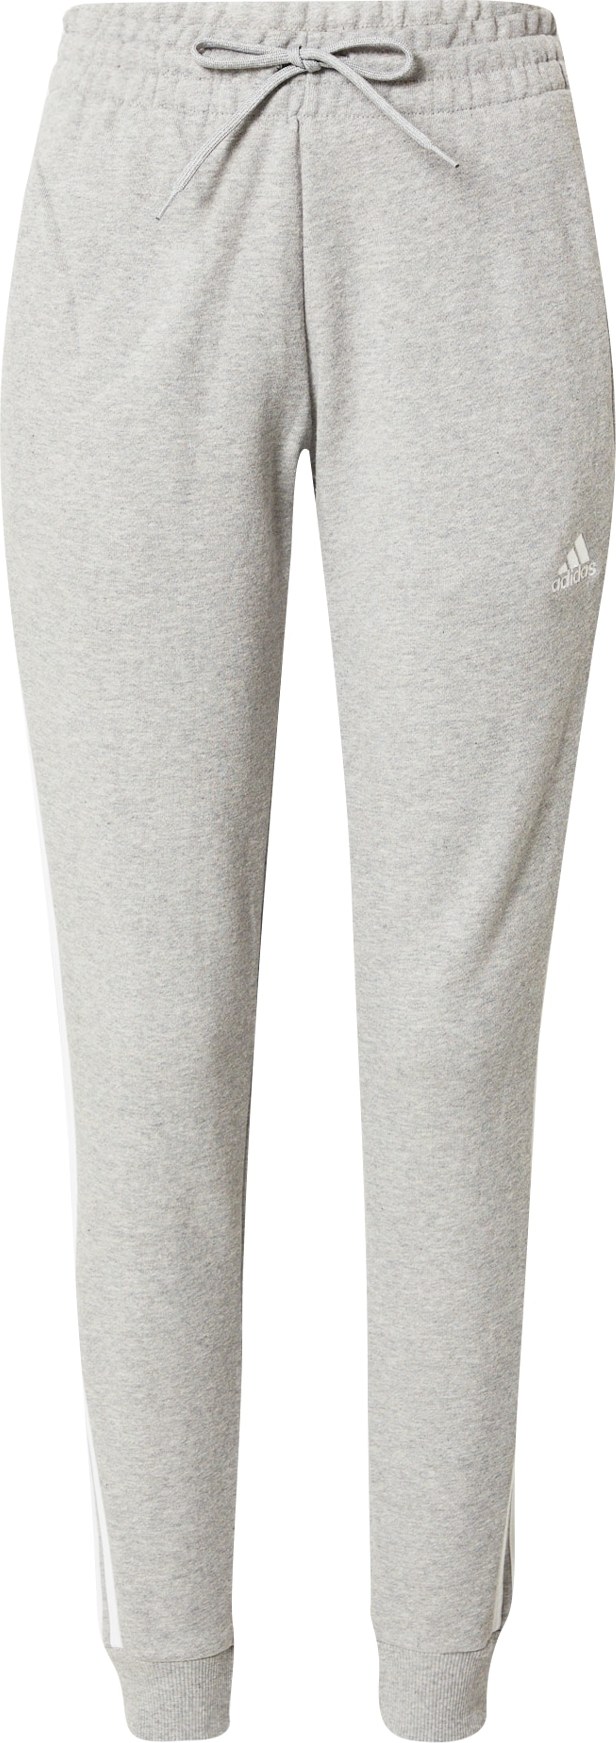 Sportovní kalhoty ADIDAS SPORTSWEAR šedý melír / bílá